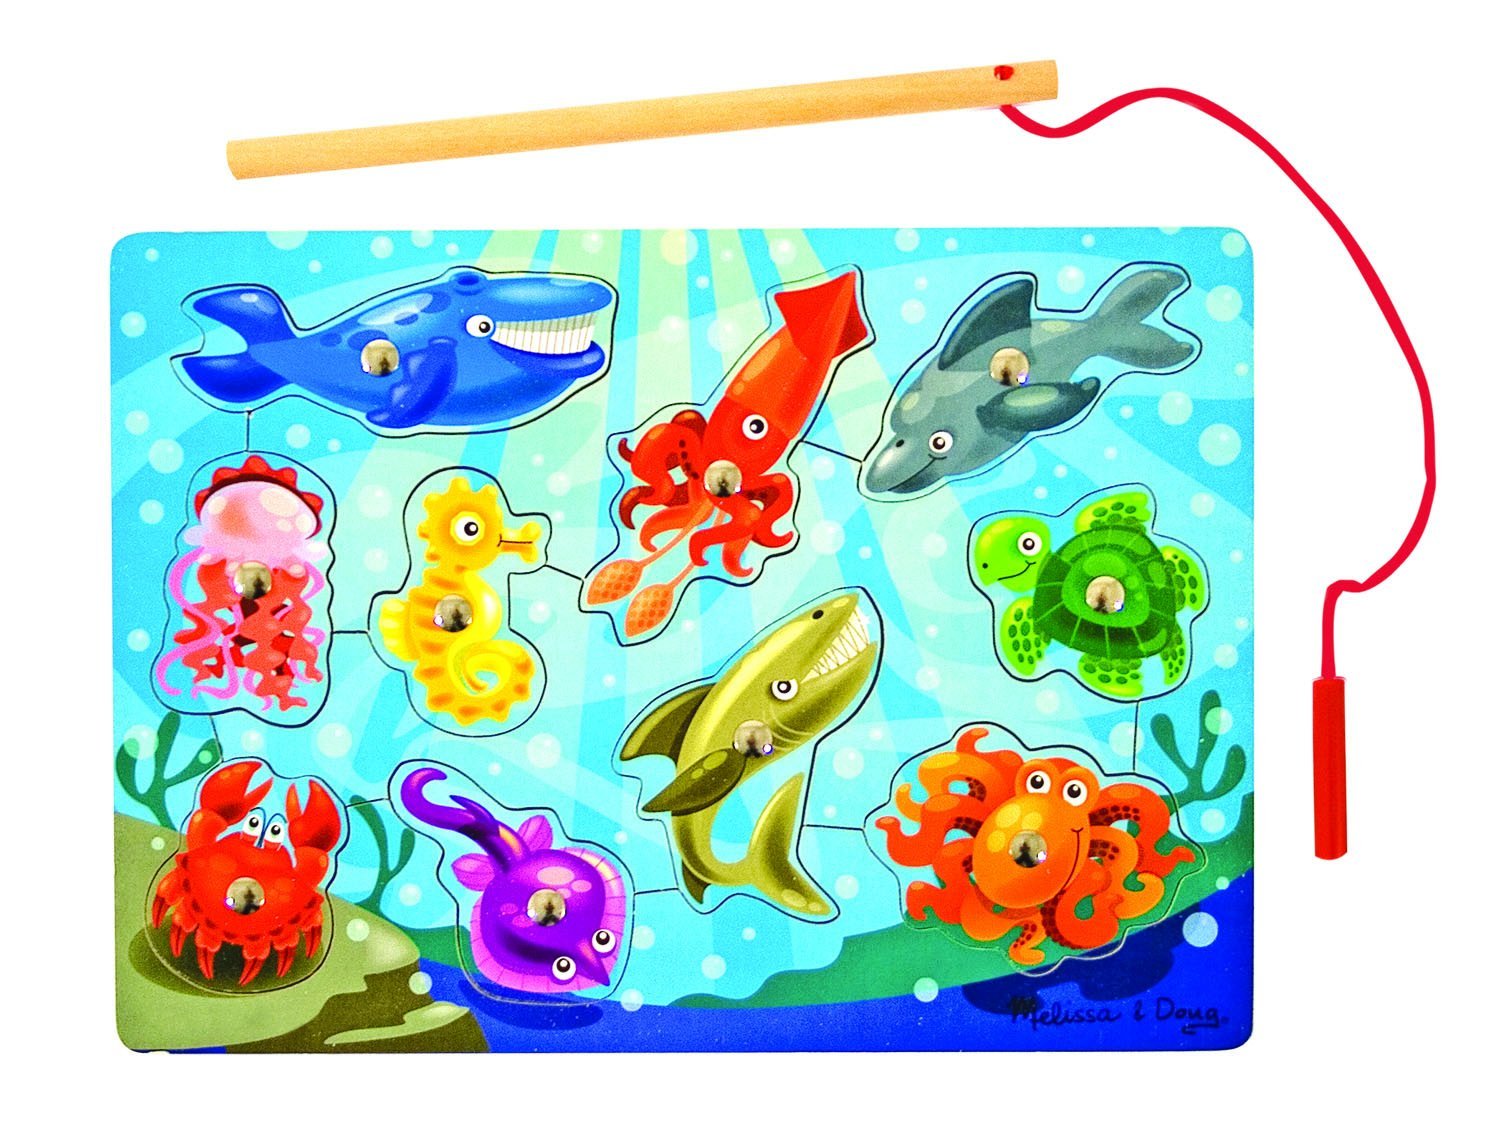 Melissa & Doug Deluxe 10 Piece Magnetic Fishing Game Only $8.11 on Amazon!